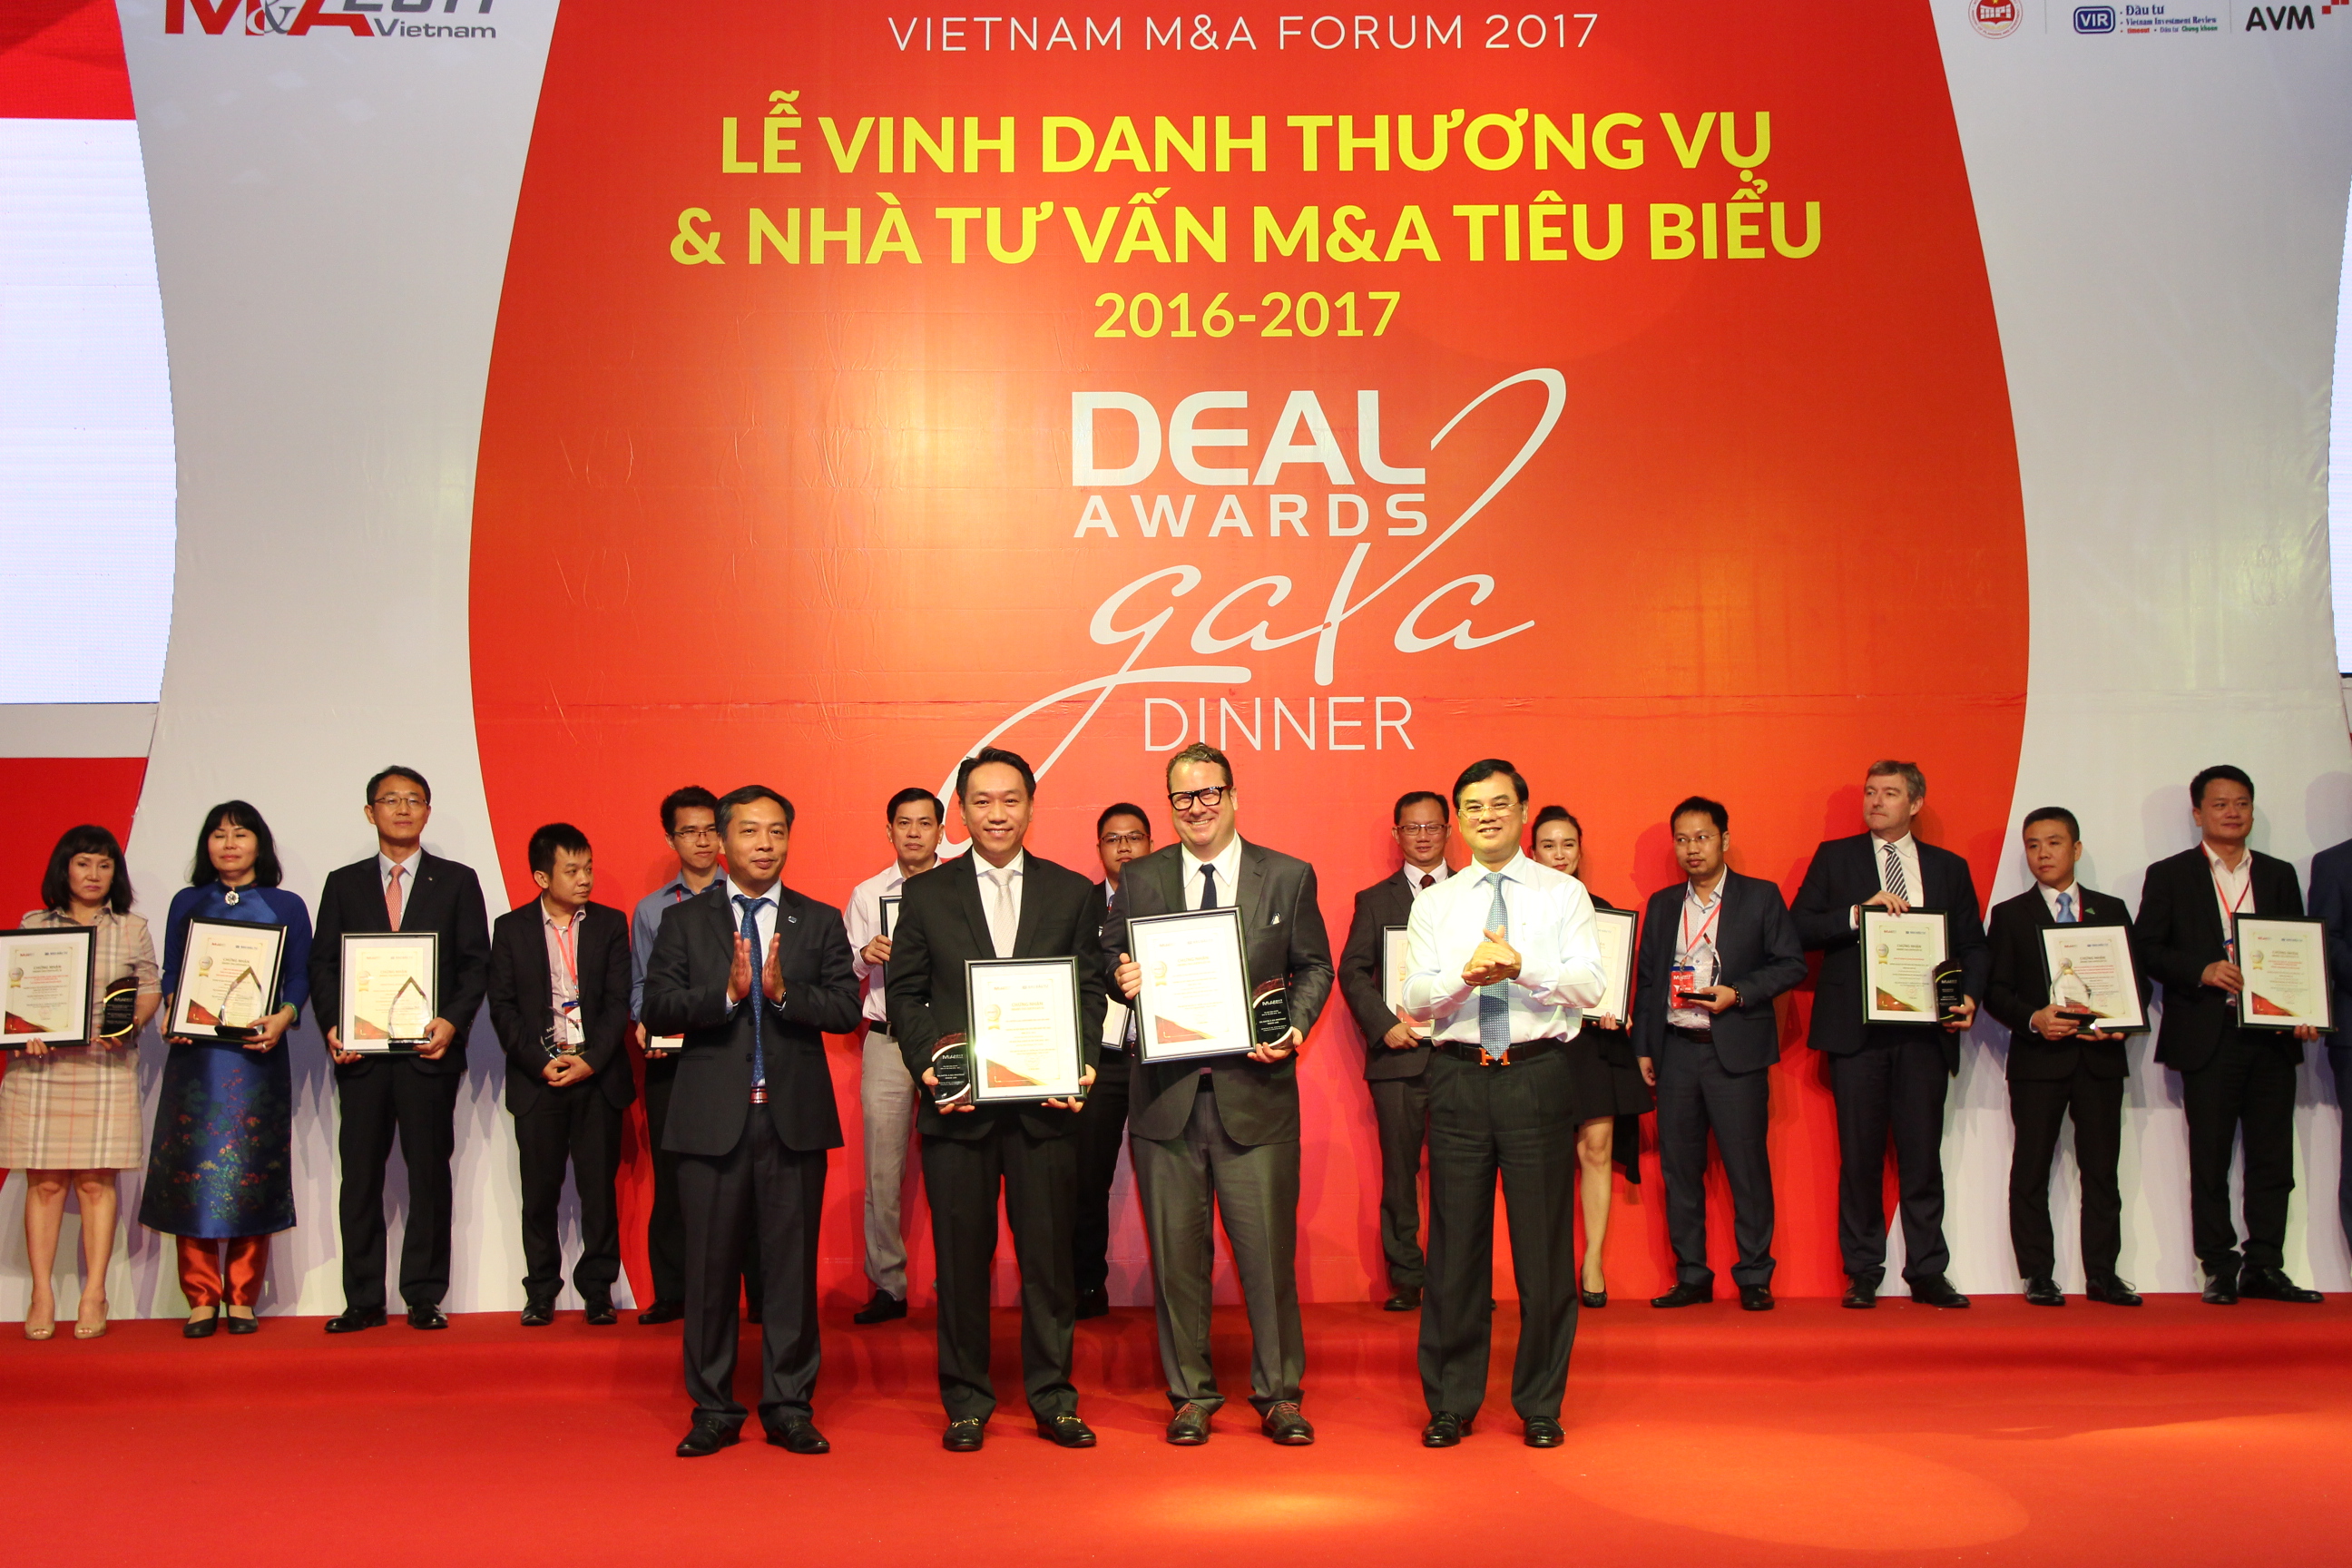 SonKim Land named winner of Vietnam M&A Forum 2017